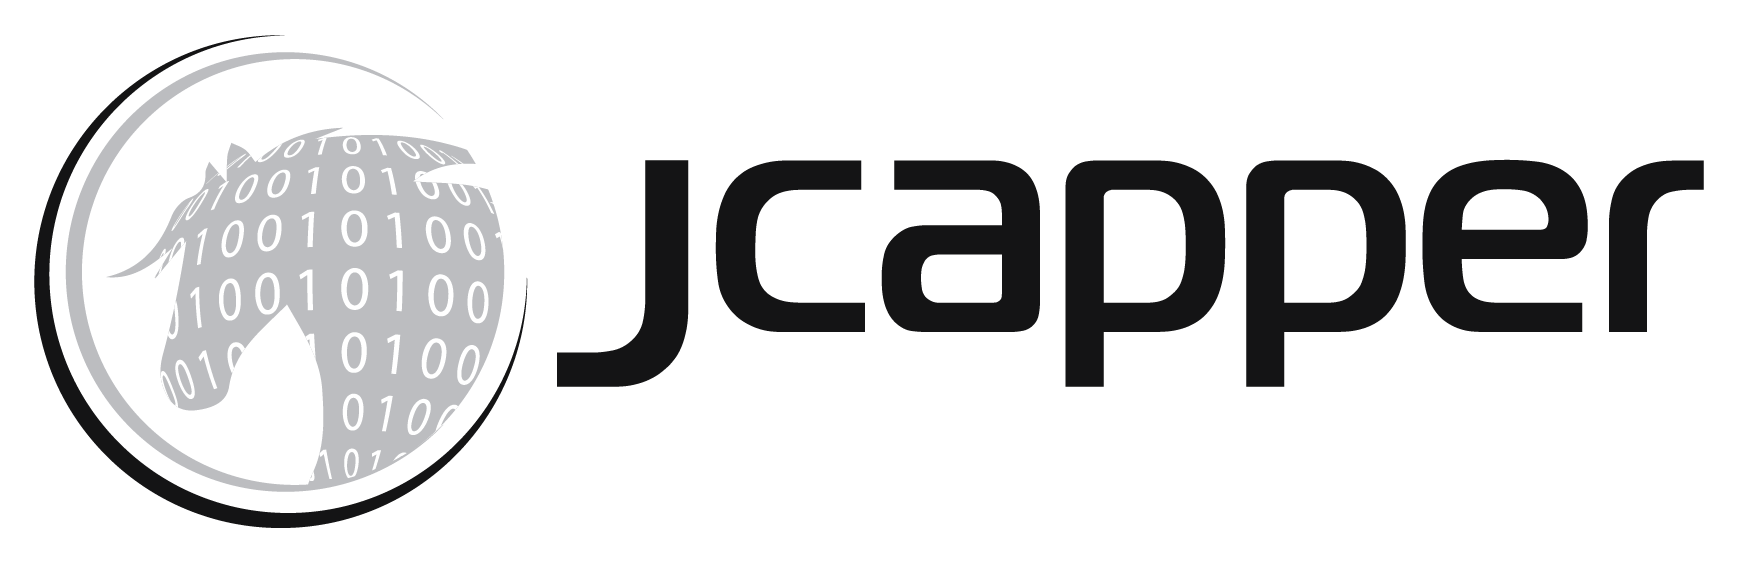 Historical Racing Data - JCapper